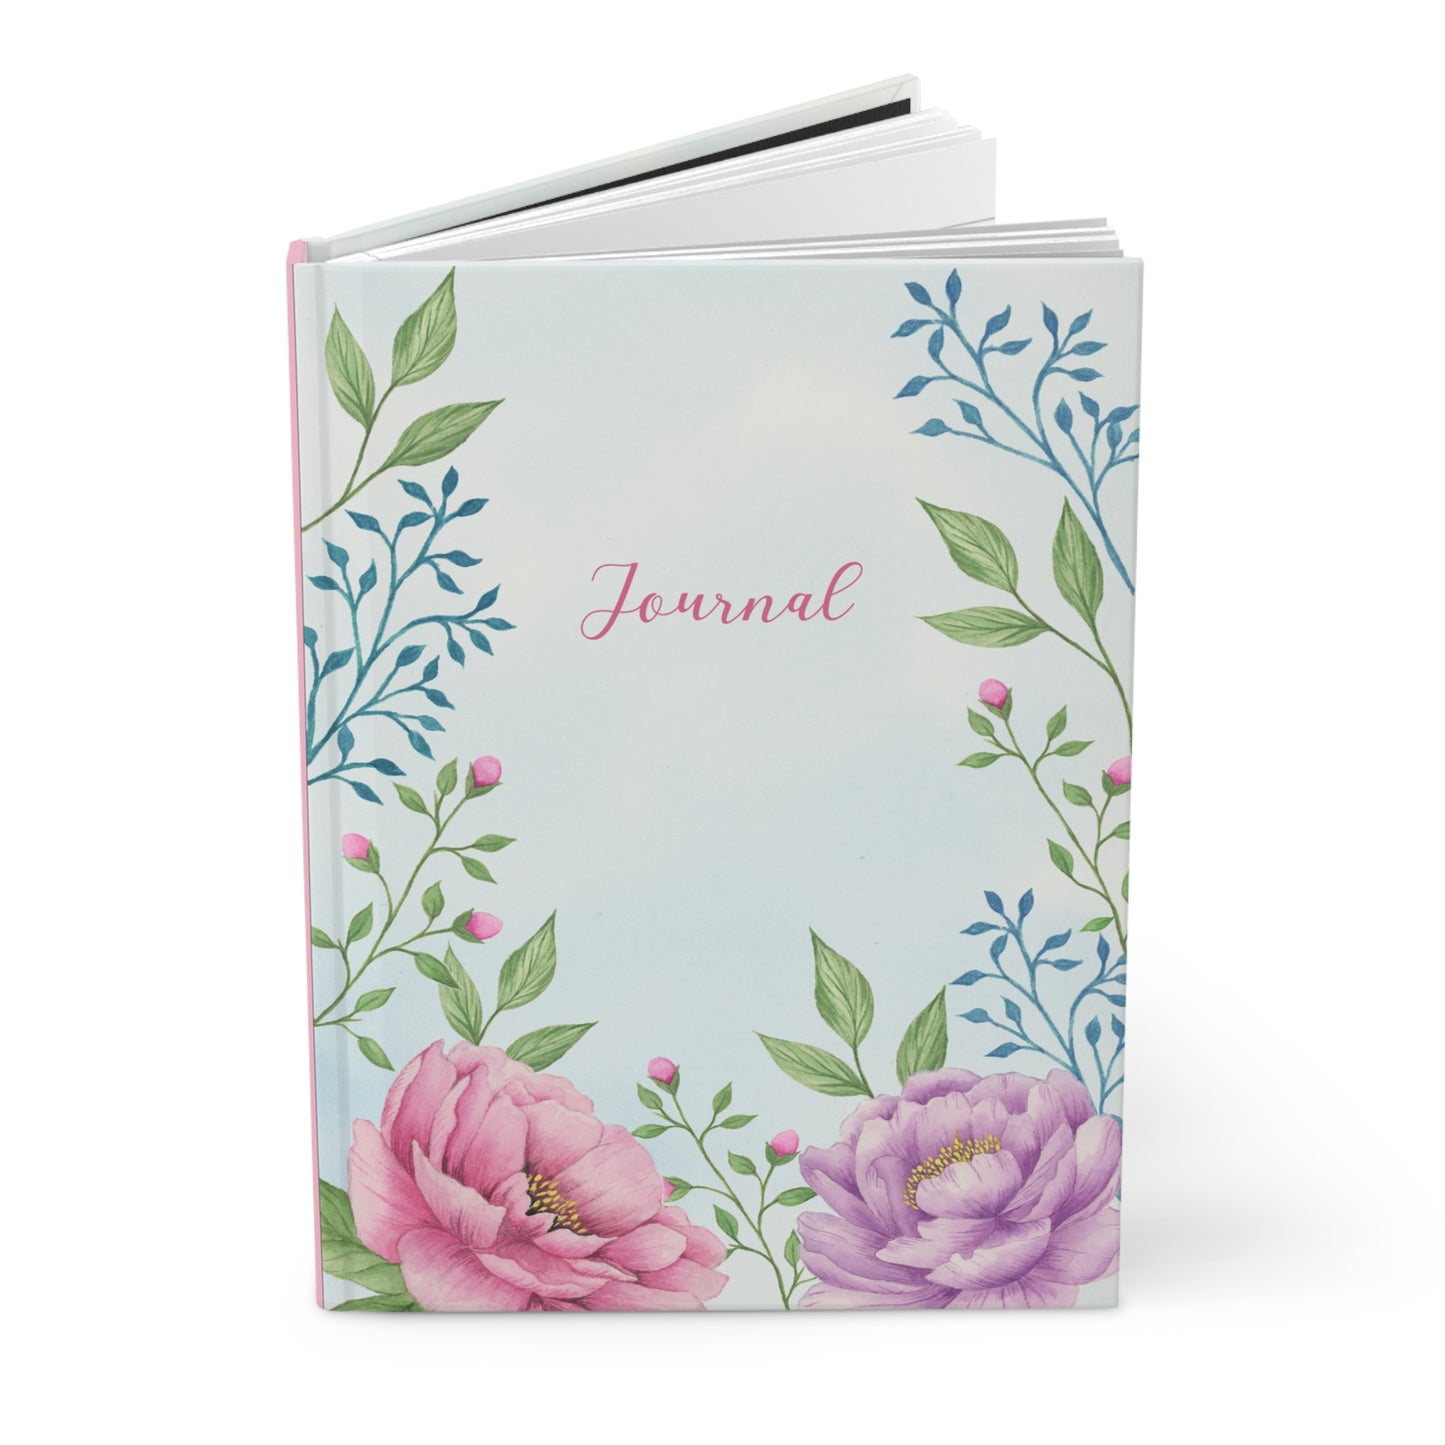 Journal - Spring Flowers